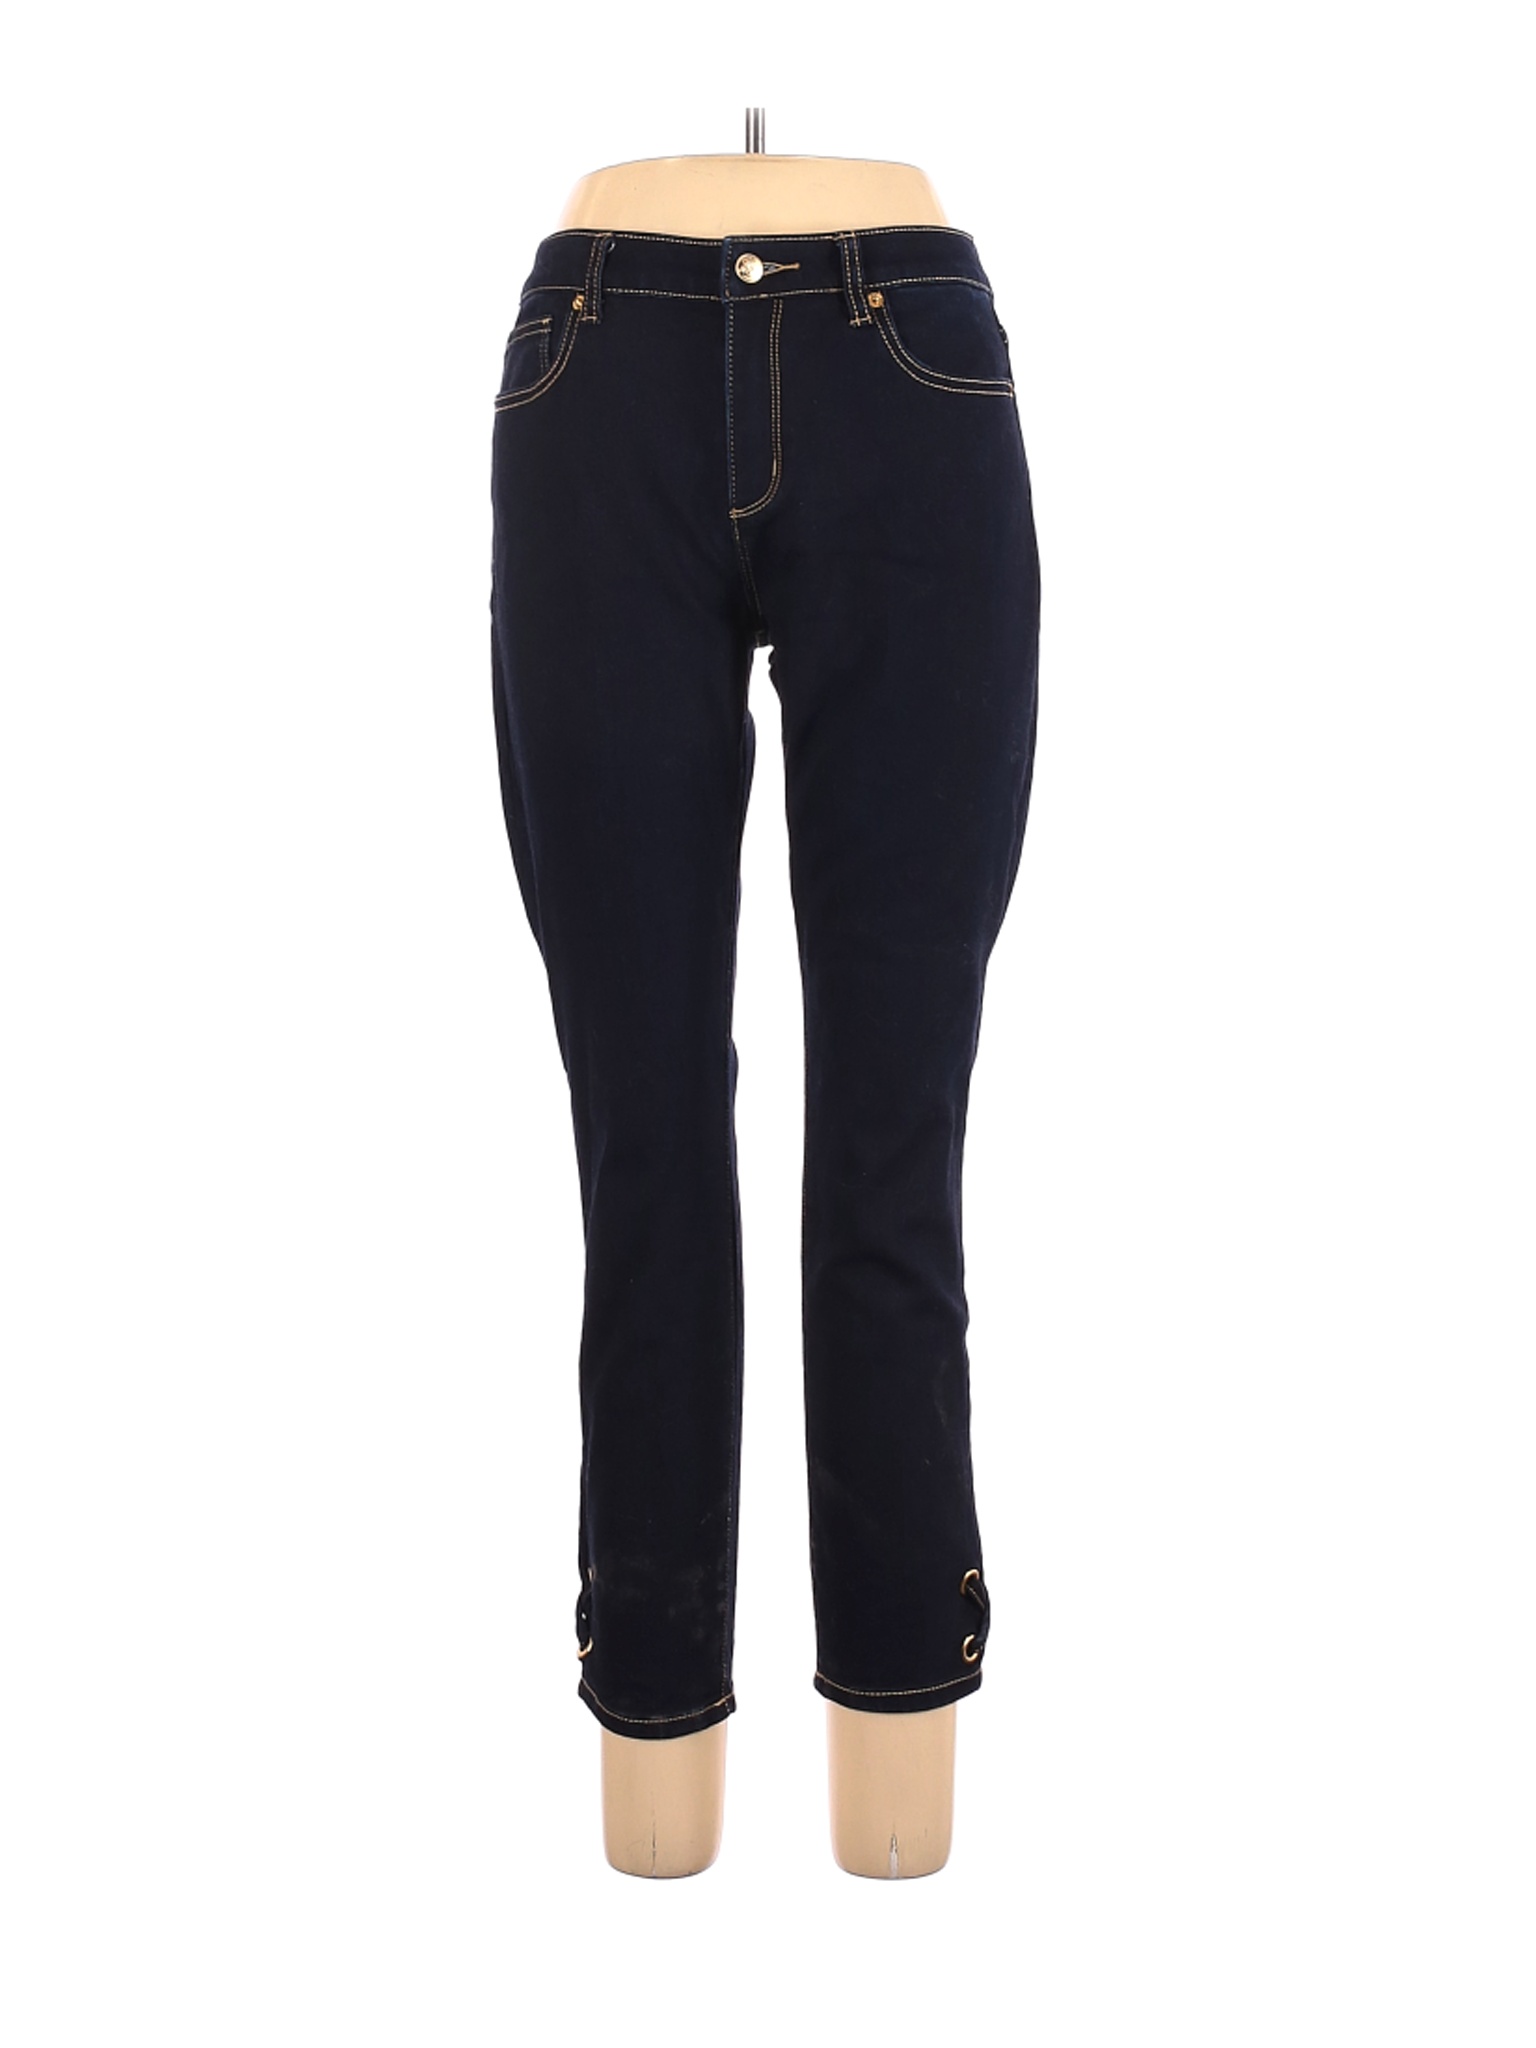 MICHAEL Michael Kors Women Black Jeans 8 | eBay